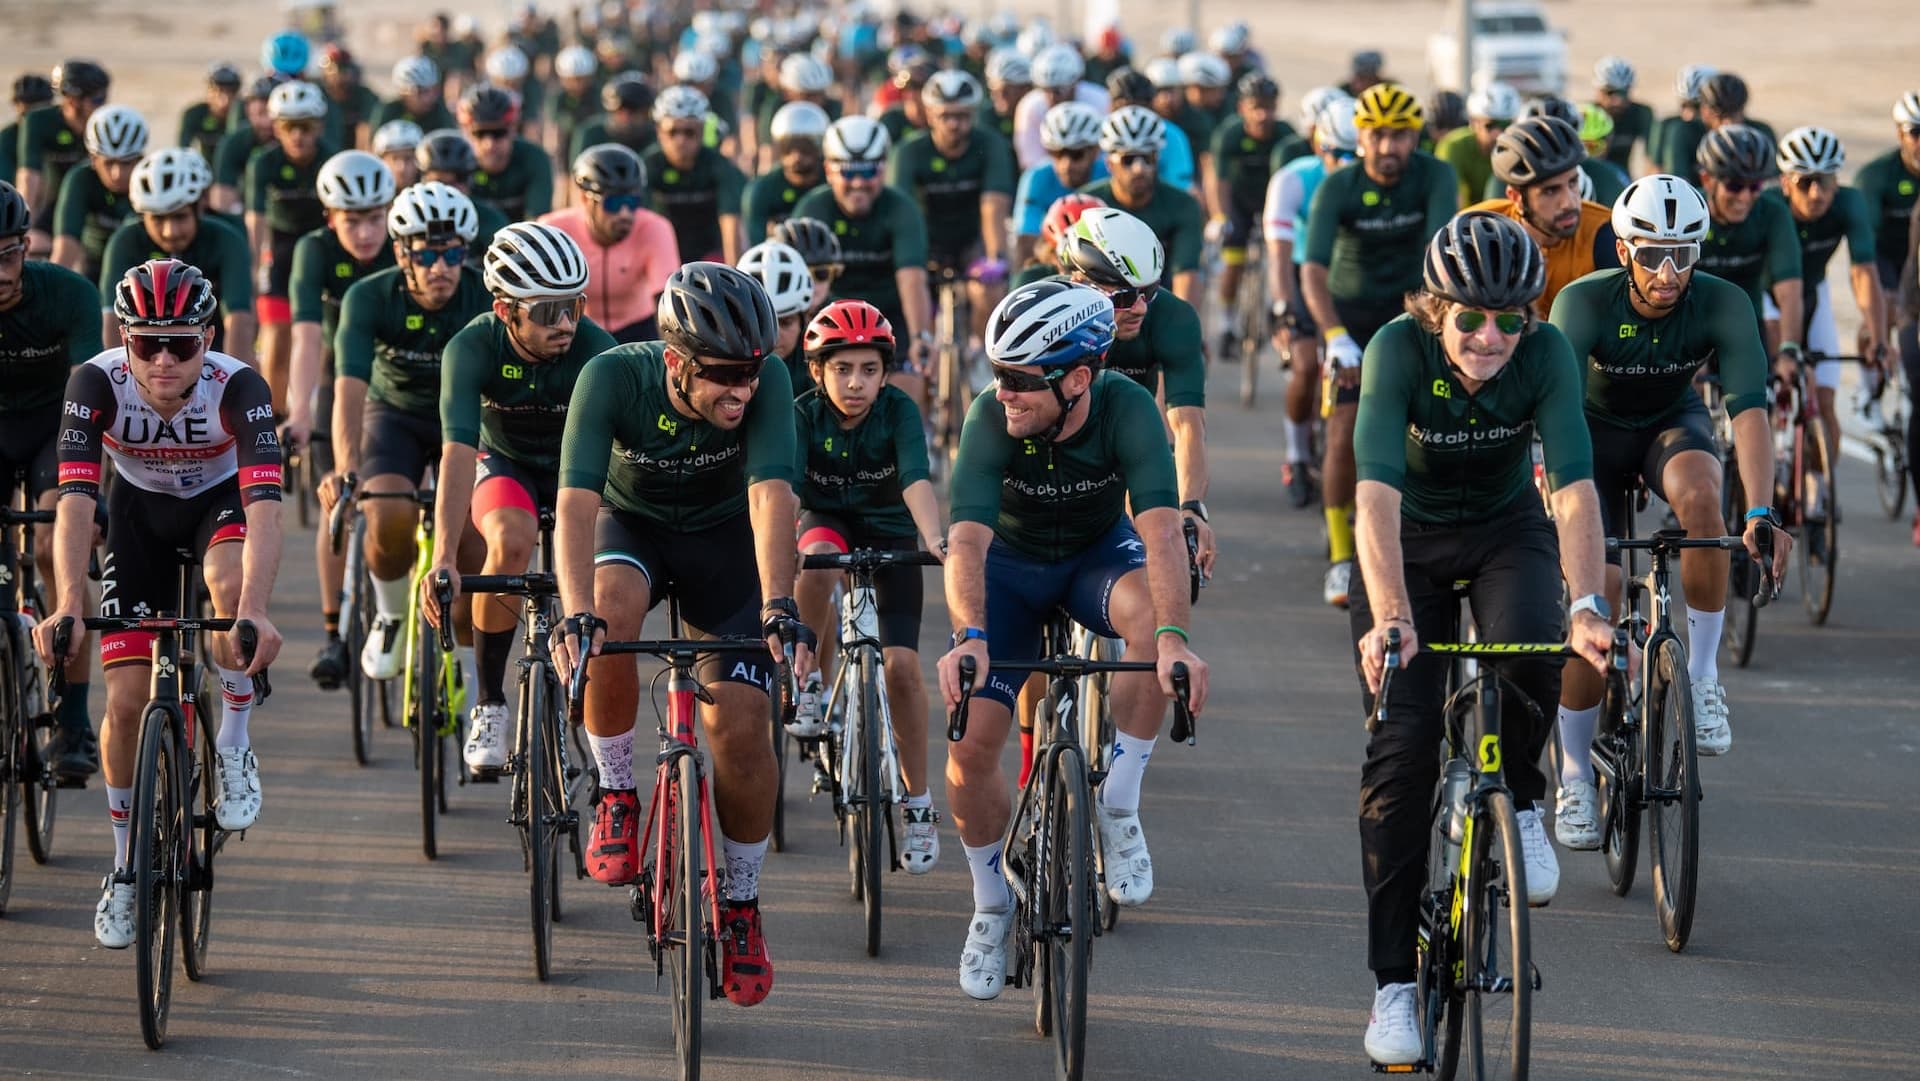 Bike Abu Dhabi energises the cycling community